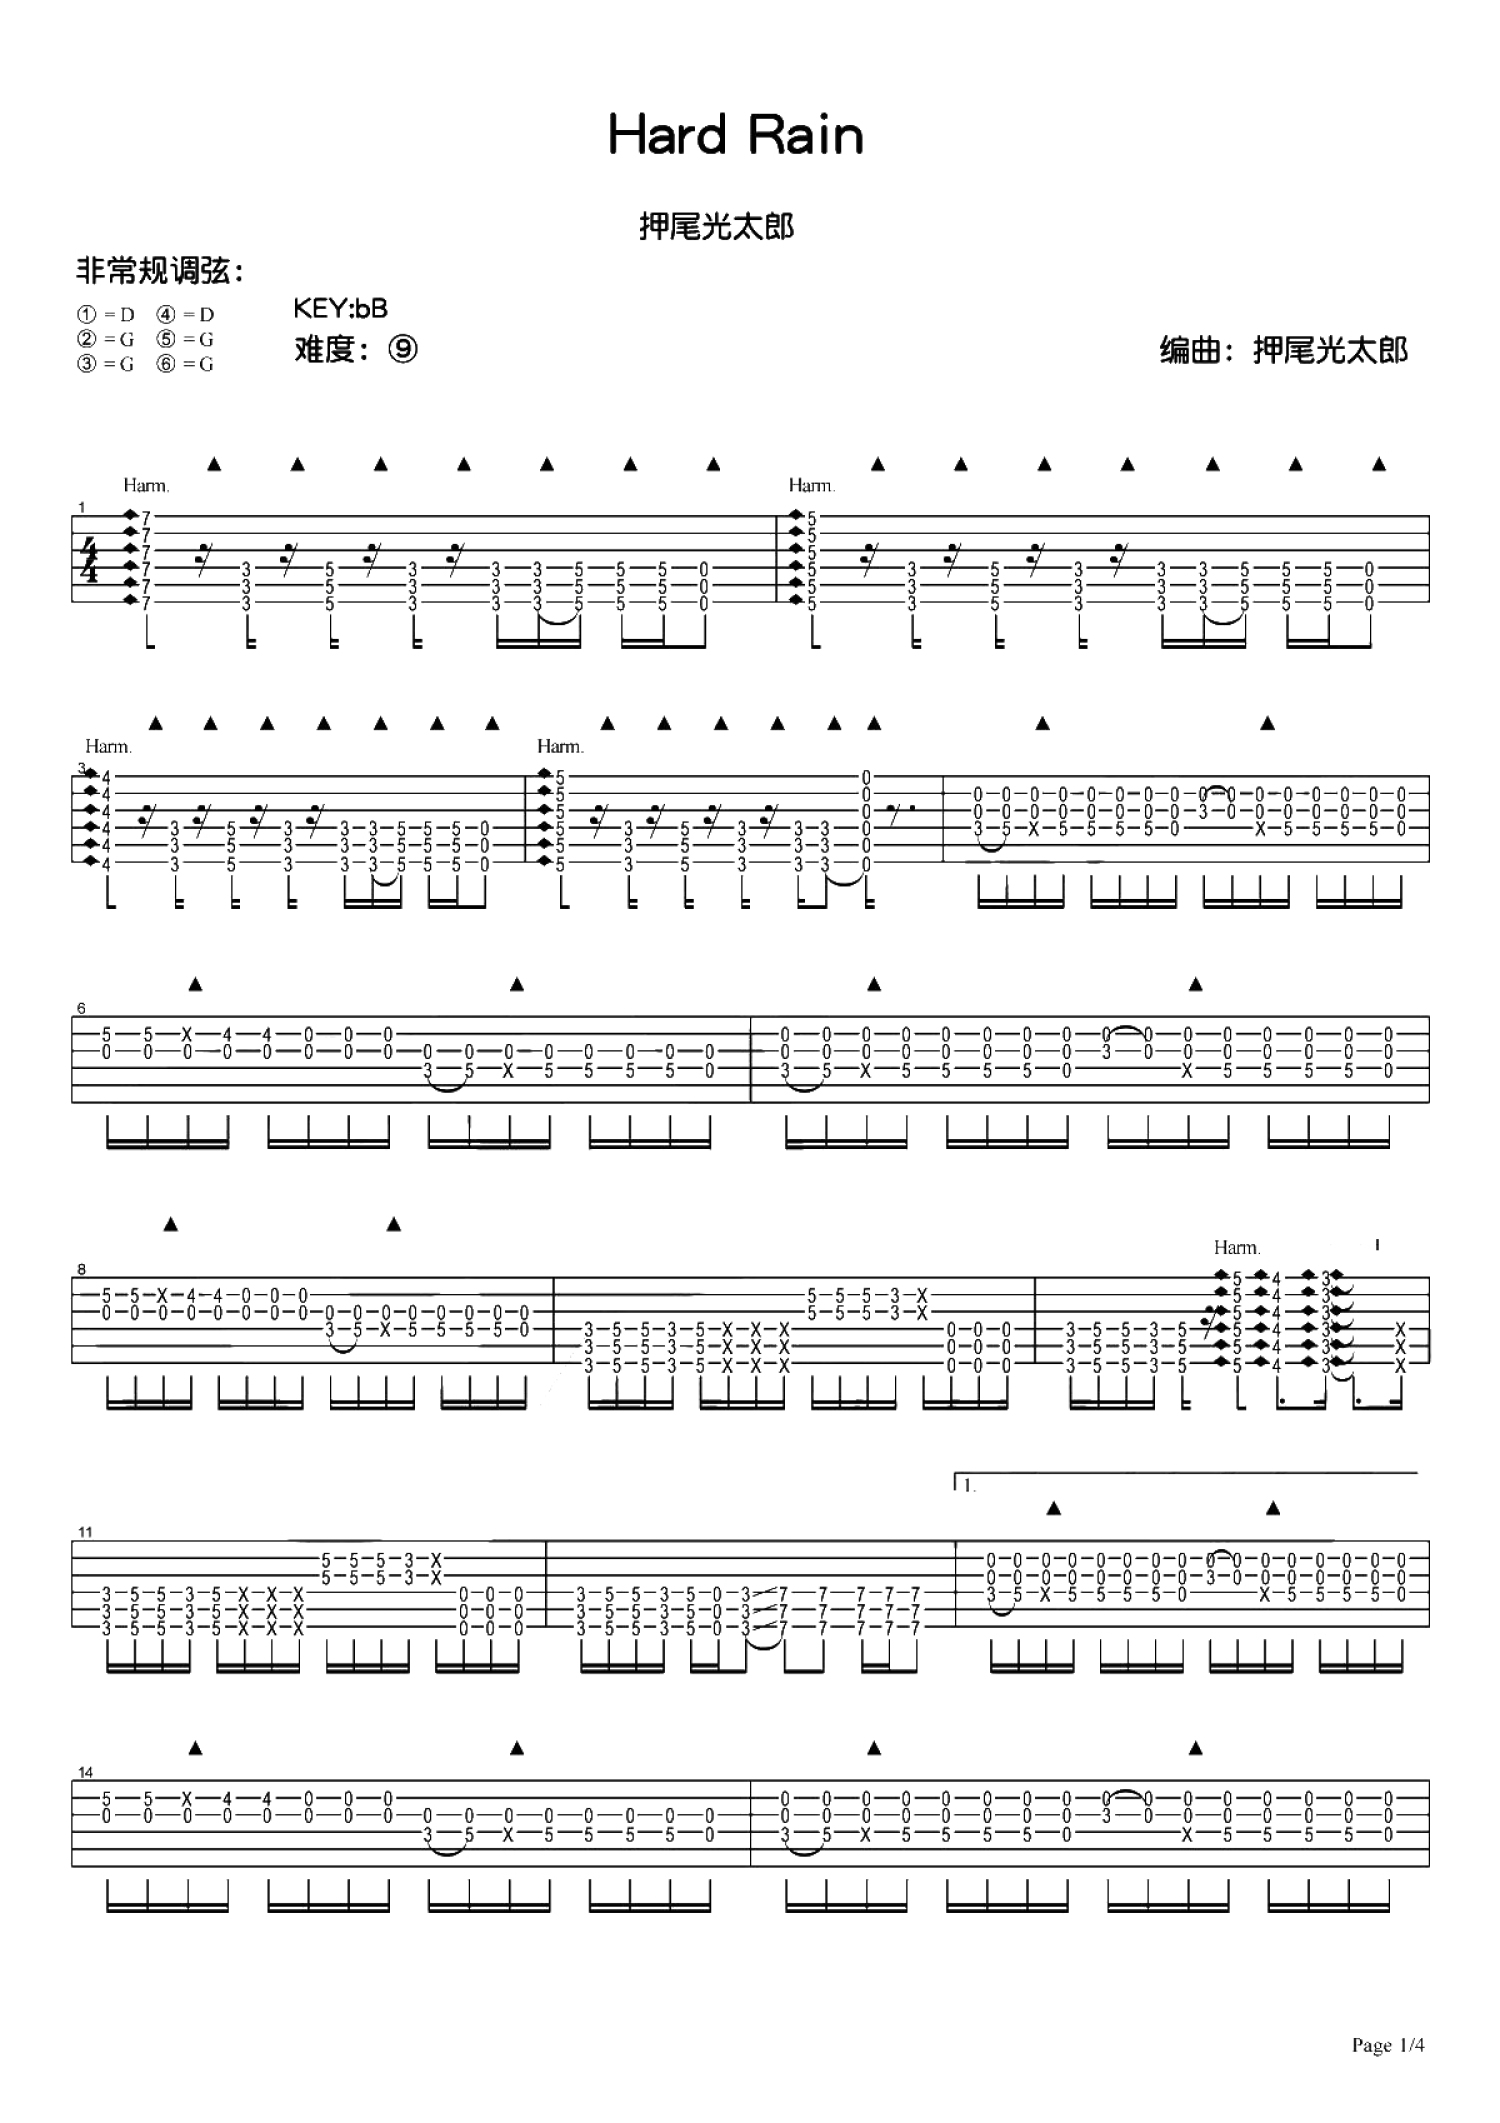 HARD RAIN 吉他谱 -彼岸吉他 - 一站式吉他爱好者服务平台